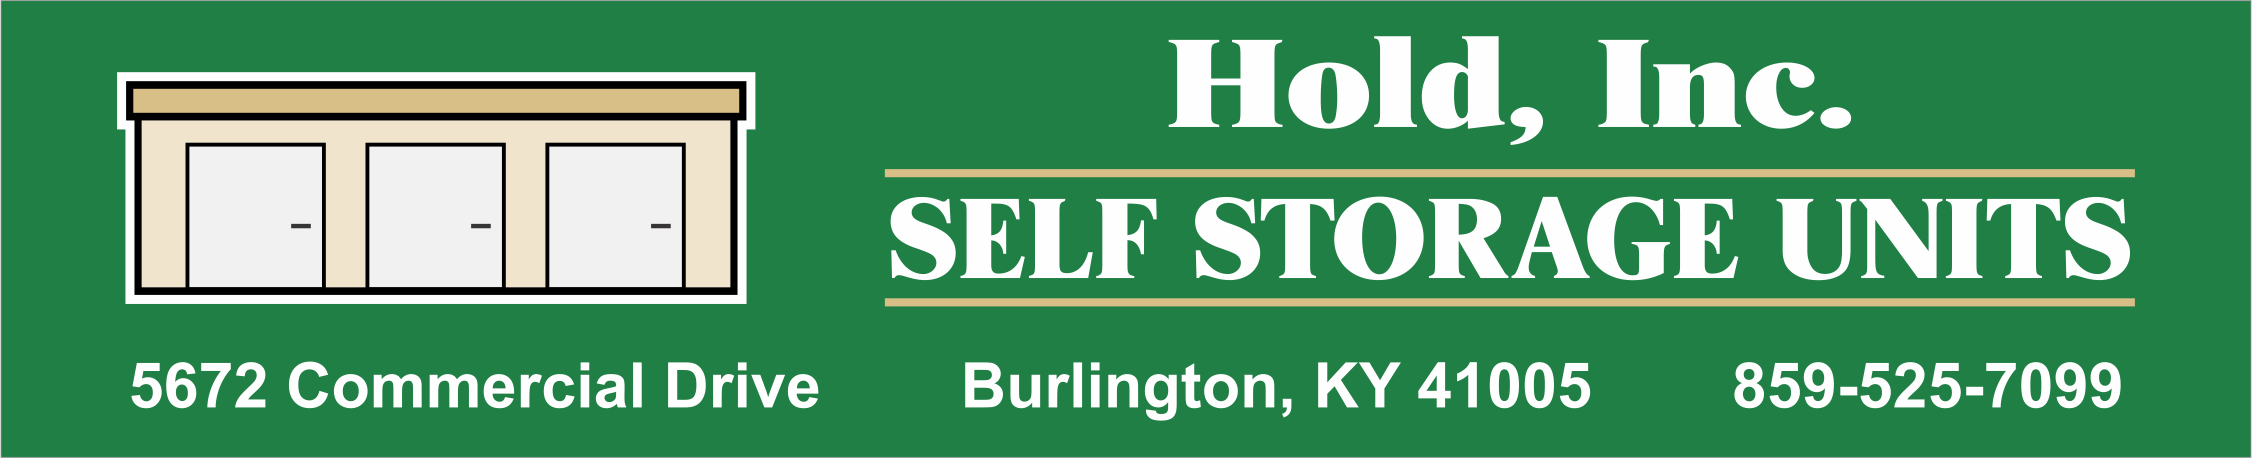 Hold, Inc. Self Storage Units